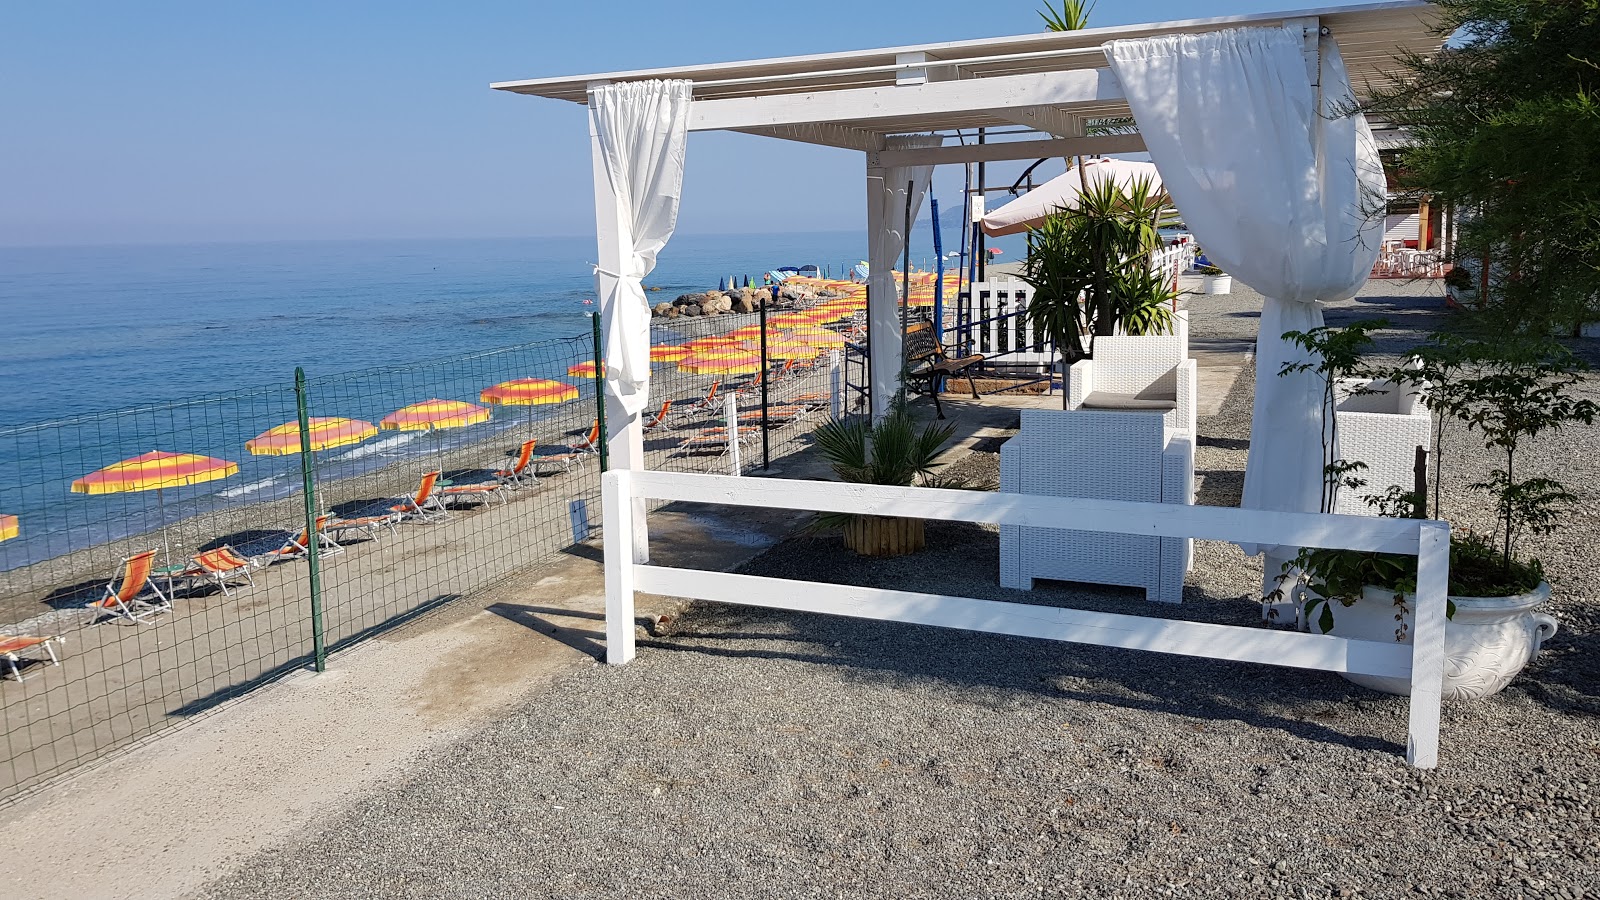 Foto de Marina di Fuscaldo beach - lugar popular entre os apreciadores de relaxamento